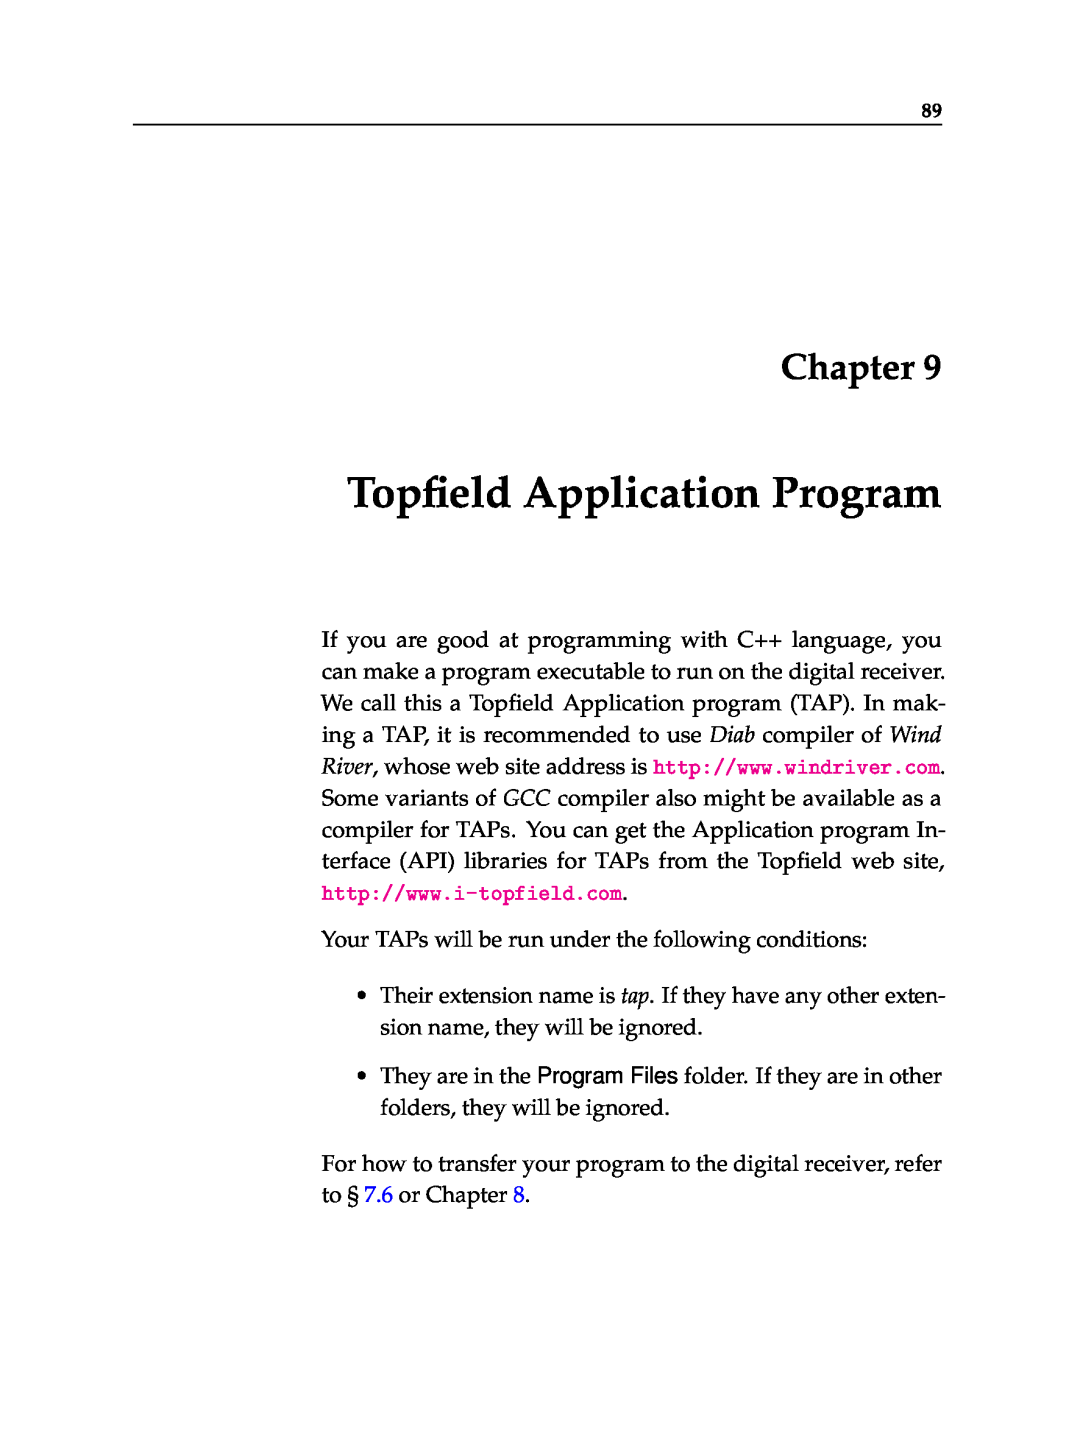 Topfield TF 6000 PVR ES manual Topﬁeld Application Program, Chapter 